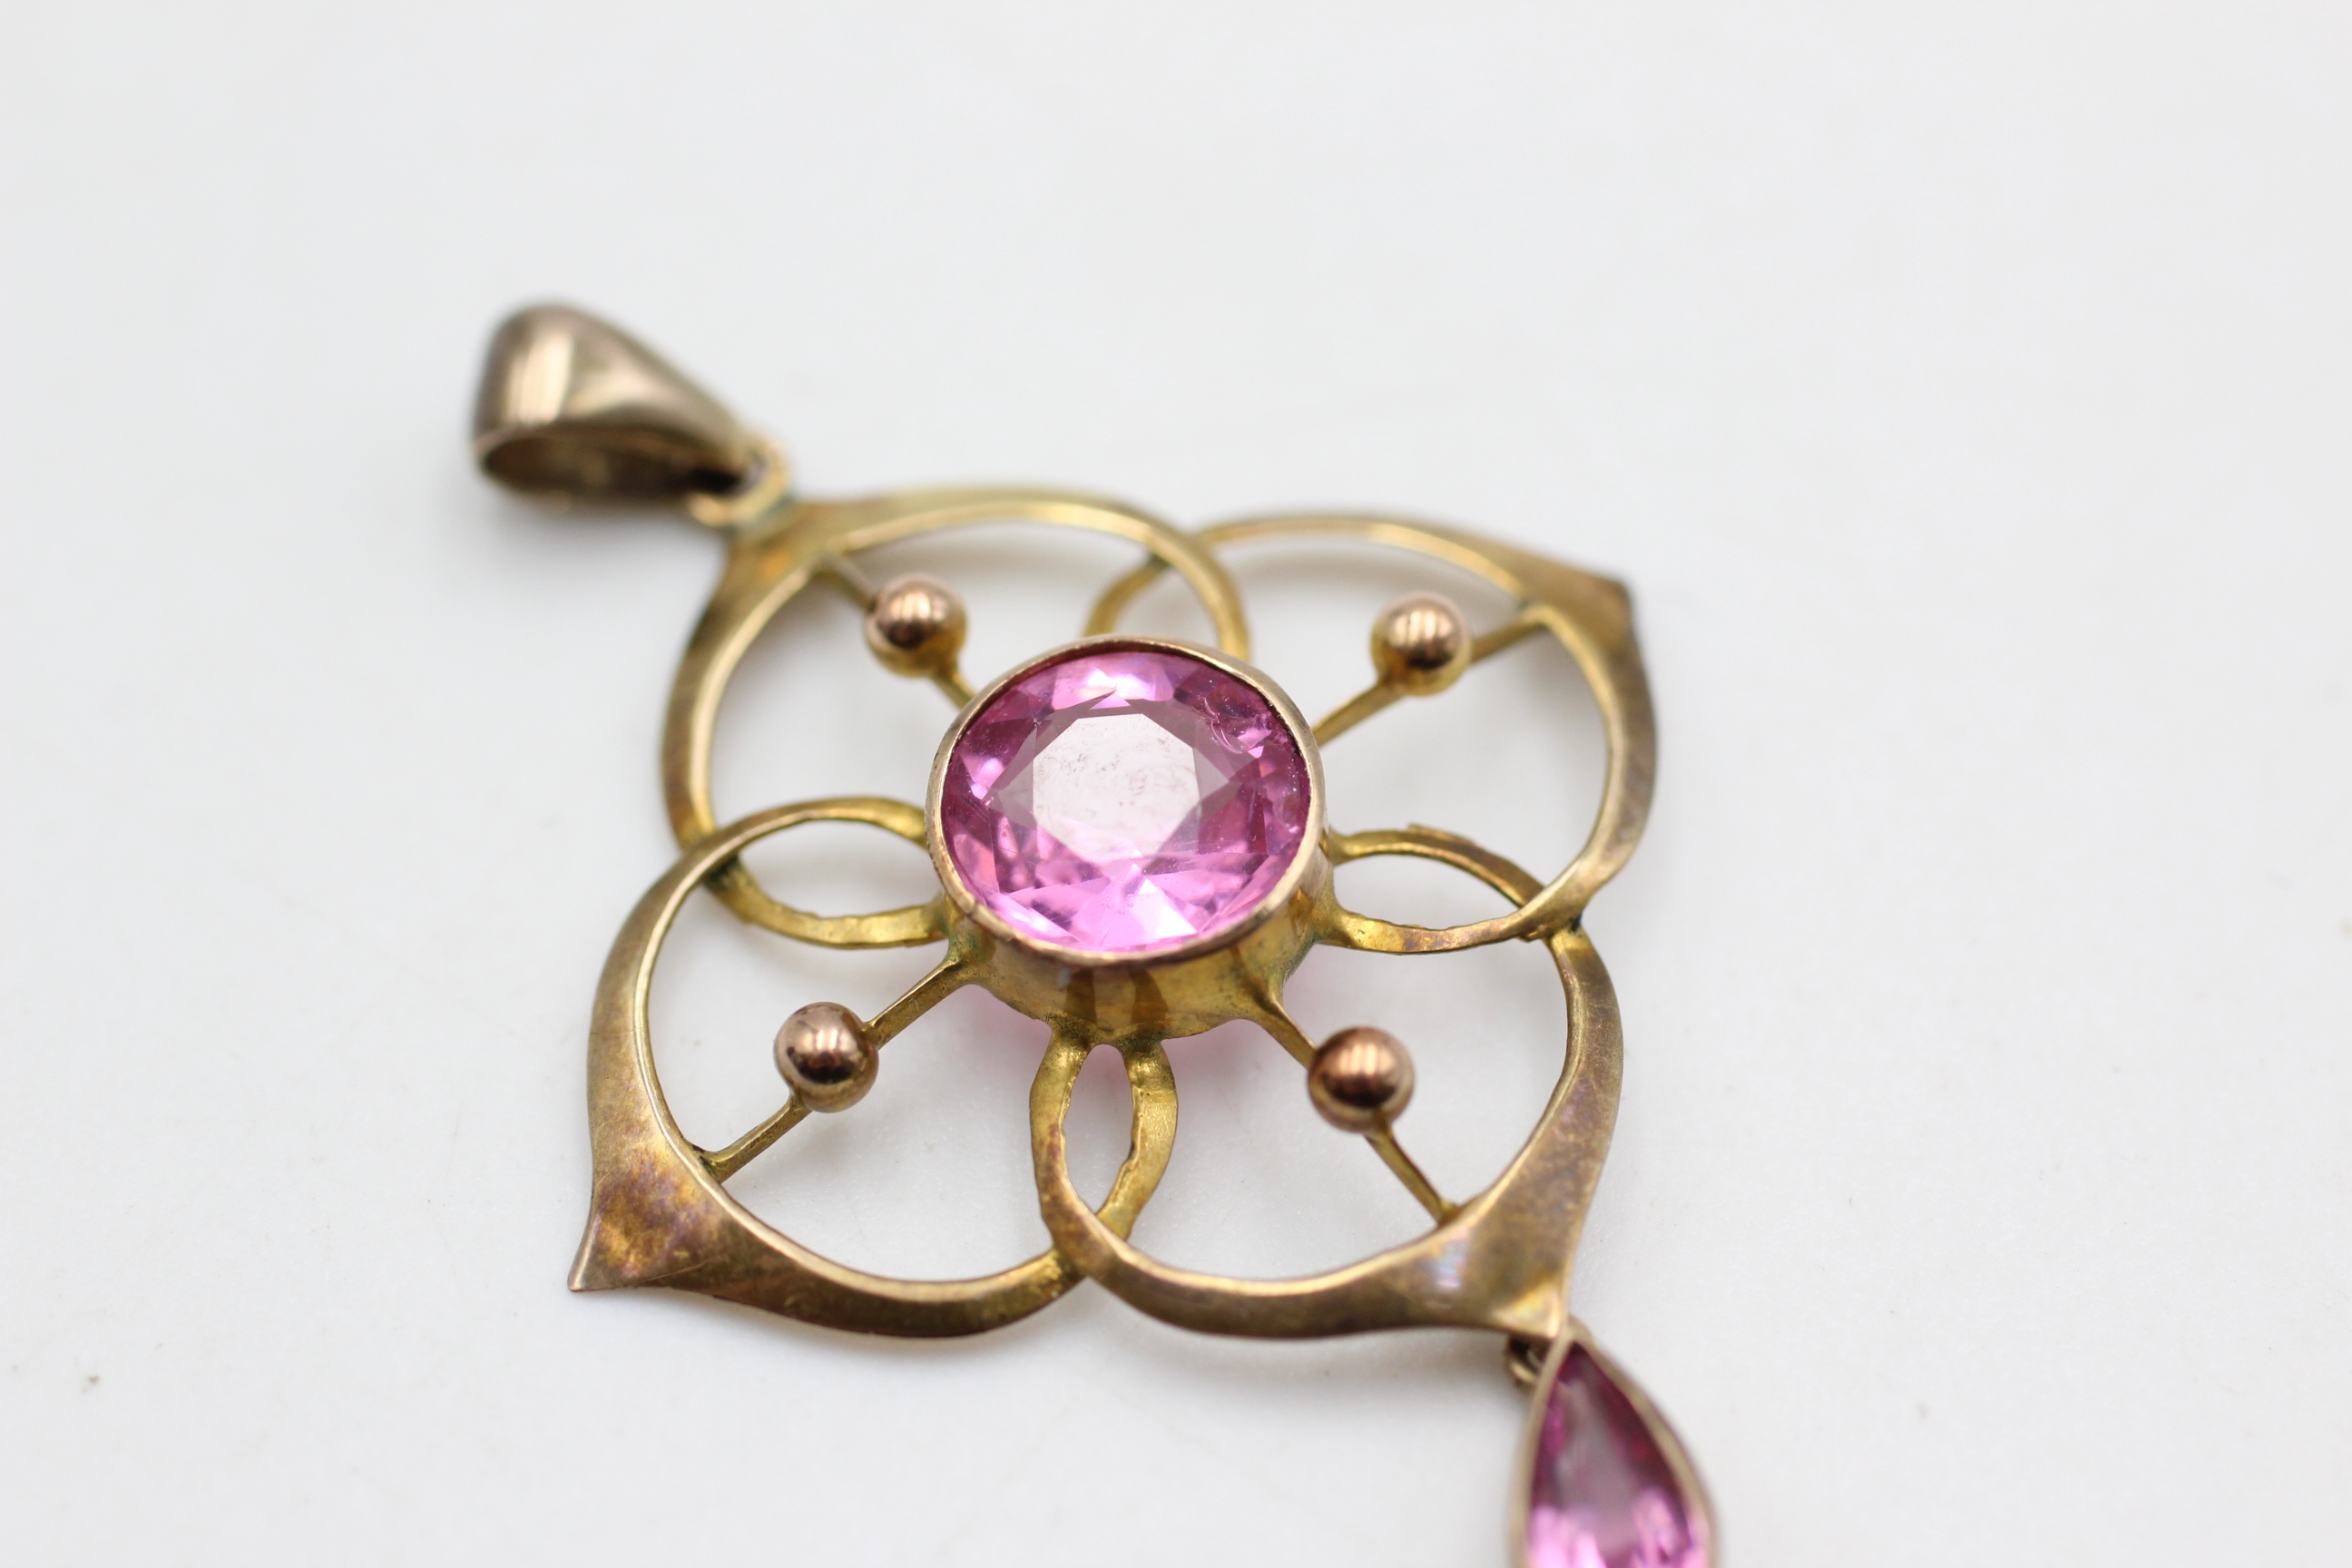 9ct gold antique garnet topped doublet lavalier pendant (1.4g) - Image 3 of 4